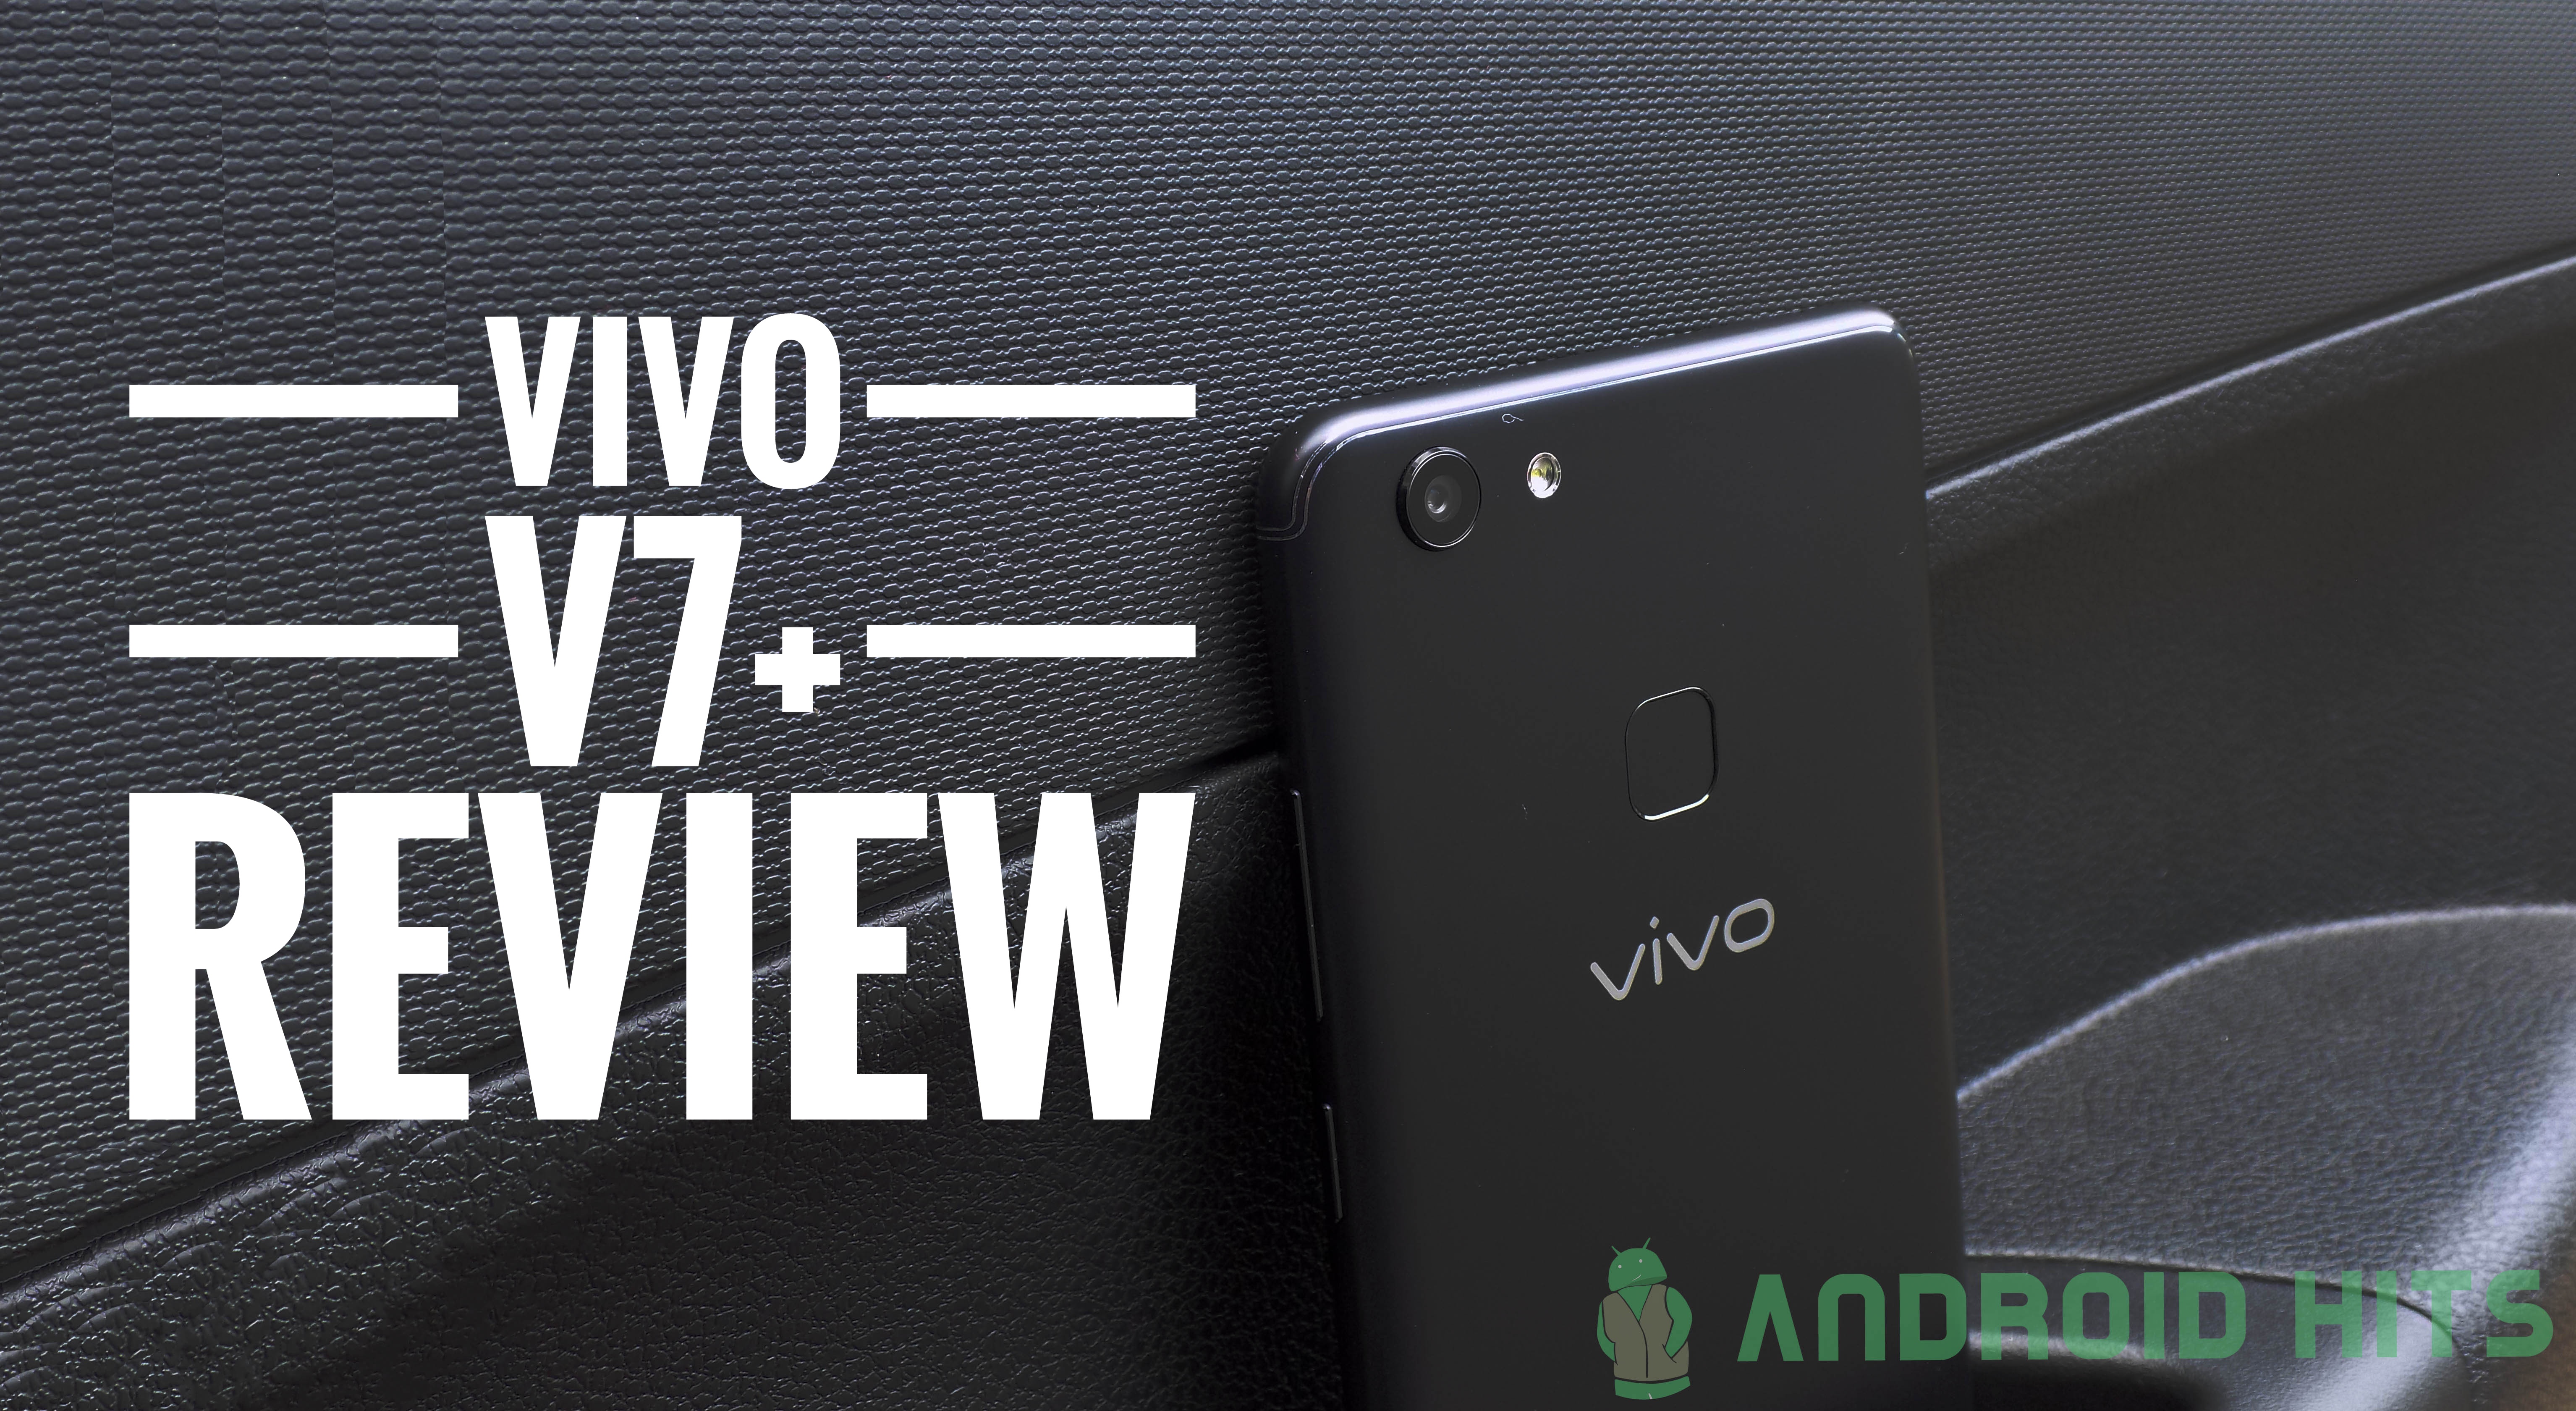 Vivo V7+ Review